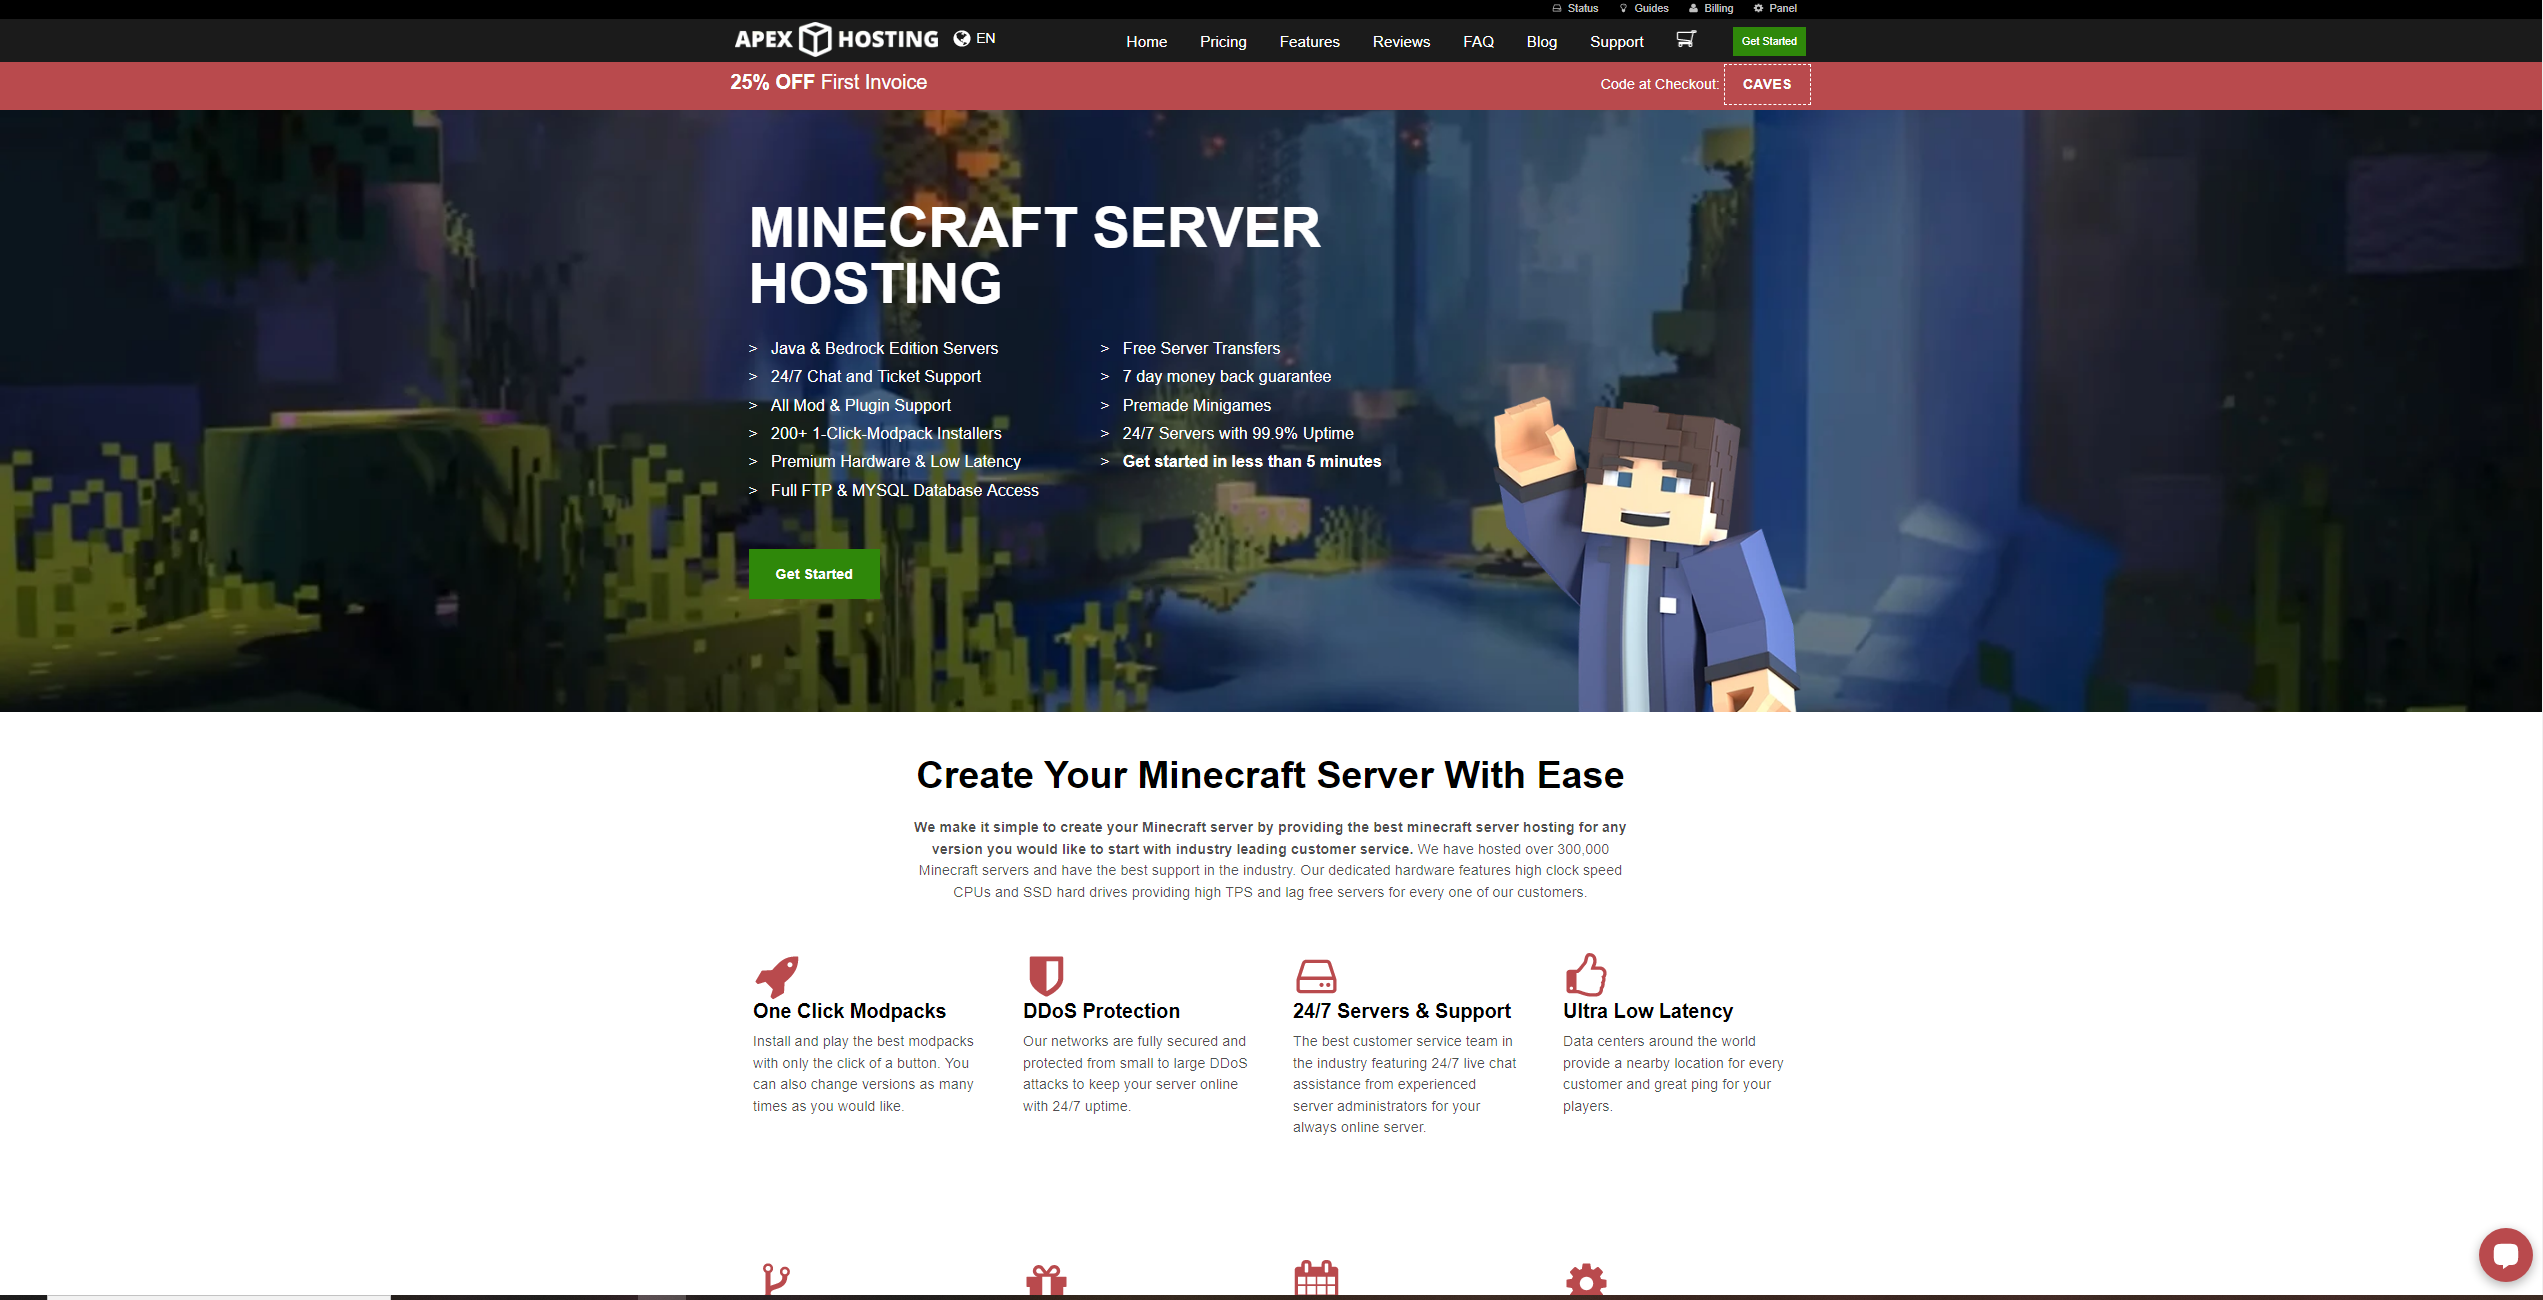 Apex Discord Server - Minecraft and more! - Apex Hosting